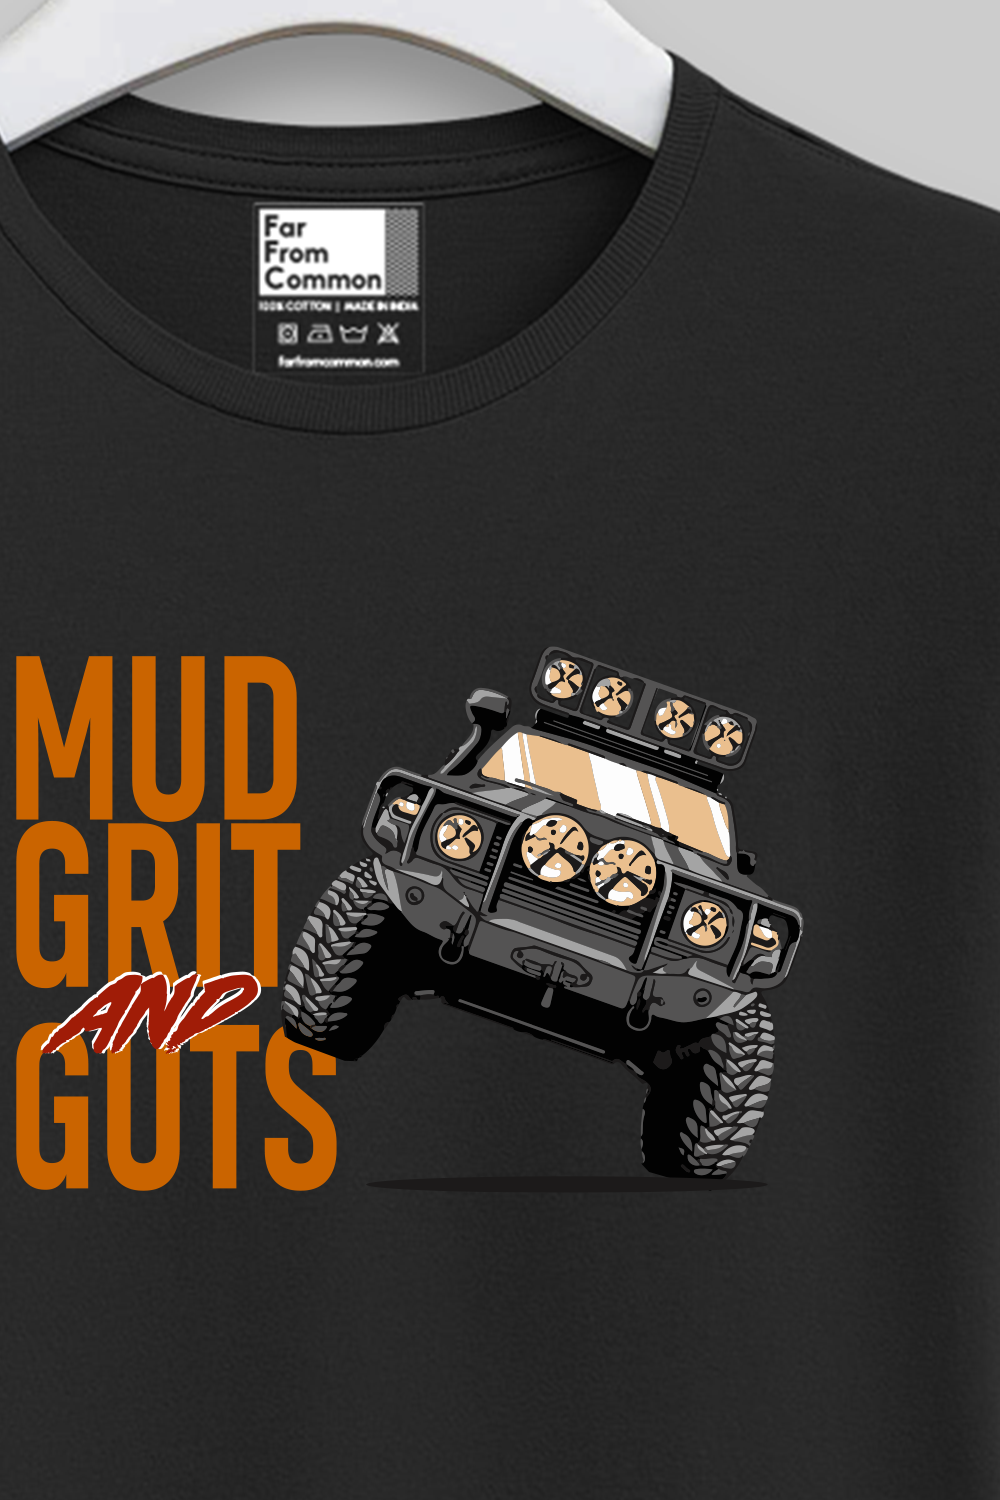 Mud Grit and Guts Black Unisex T-shirt